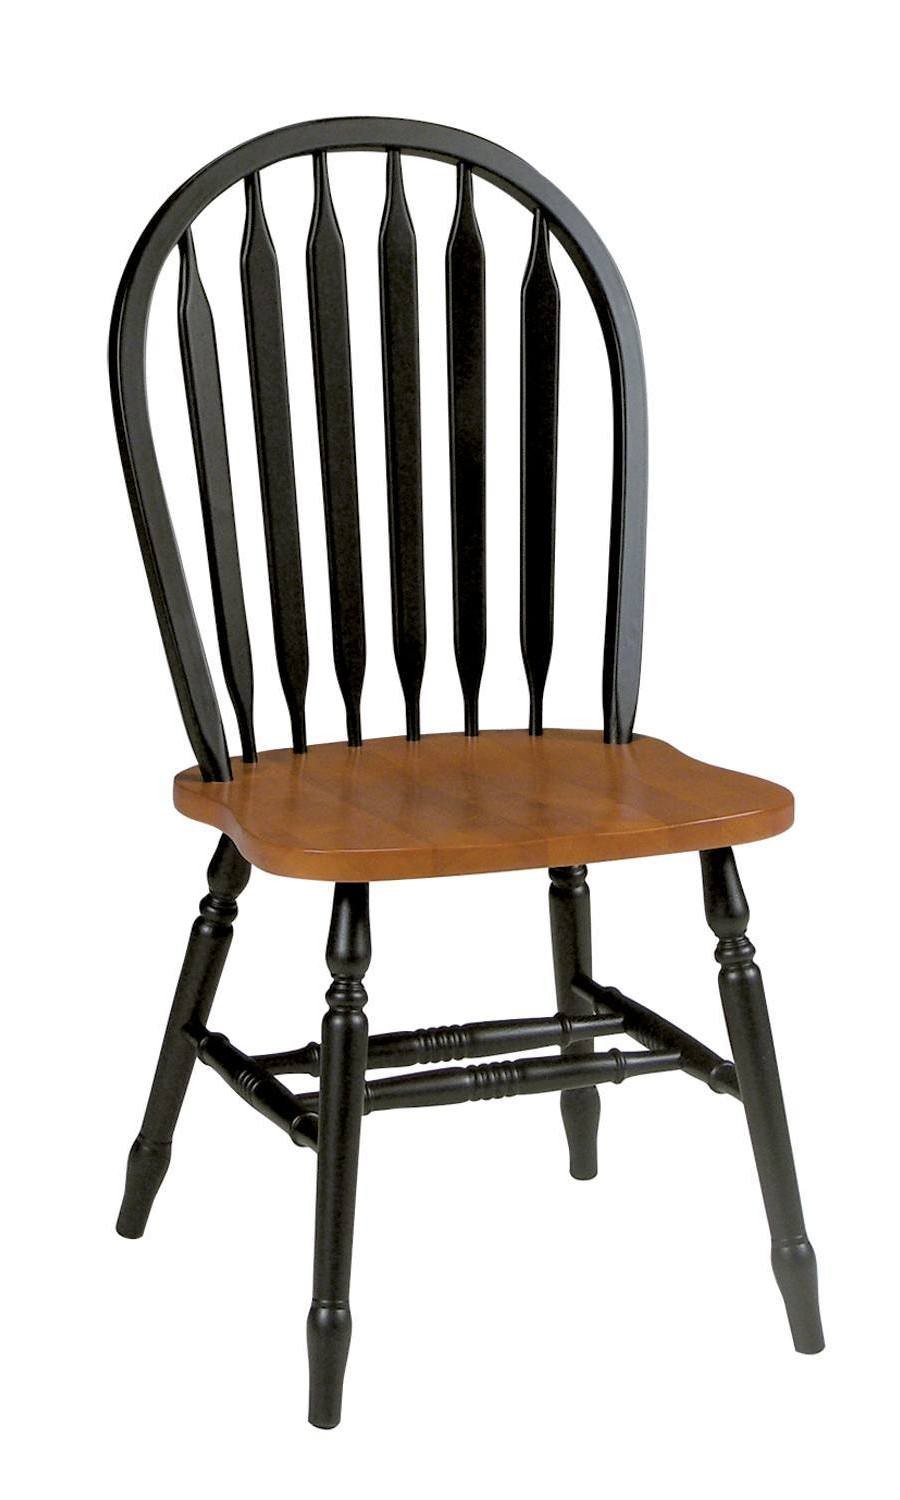 Arrowback Windsor Side Chairs